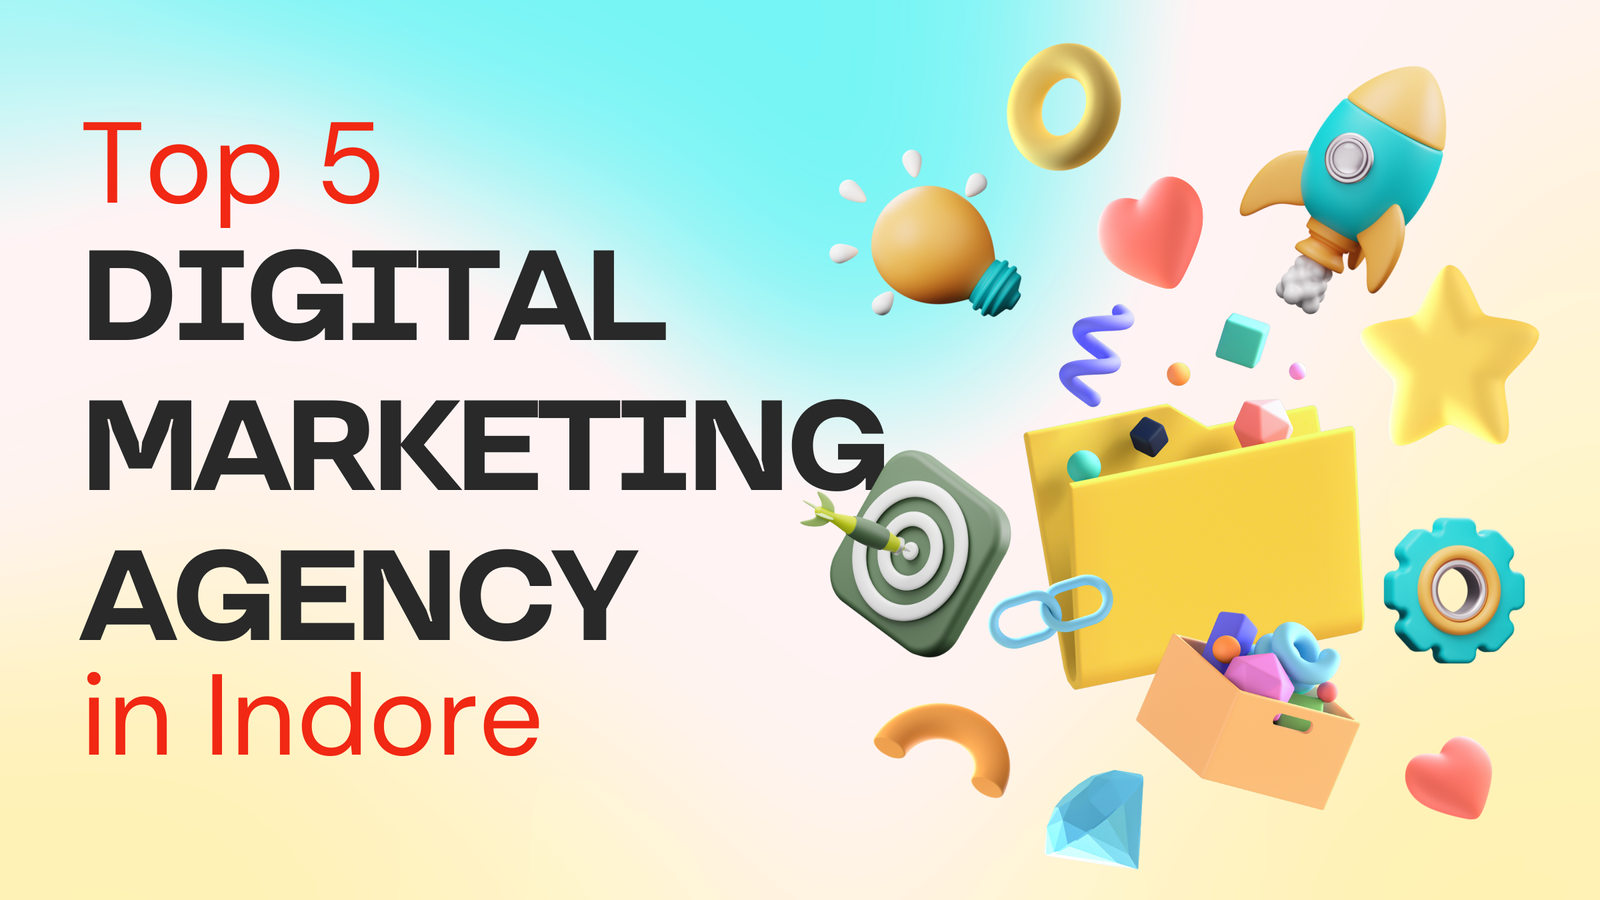 Top 5 Digital Marketing Agencies in Indore